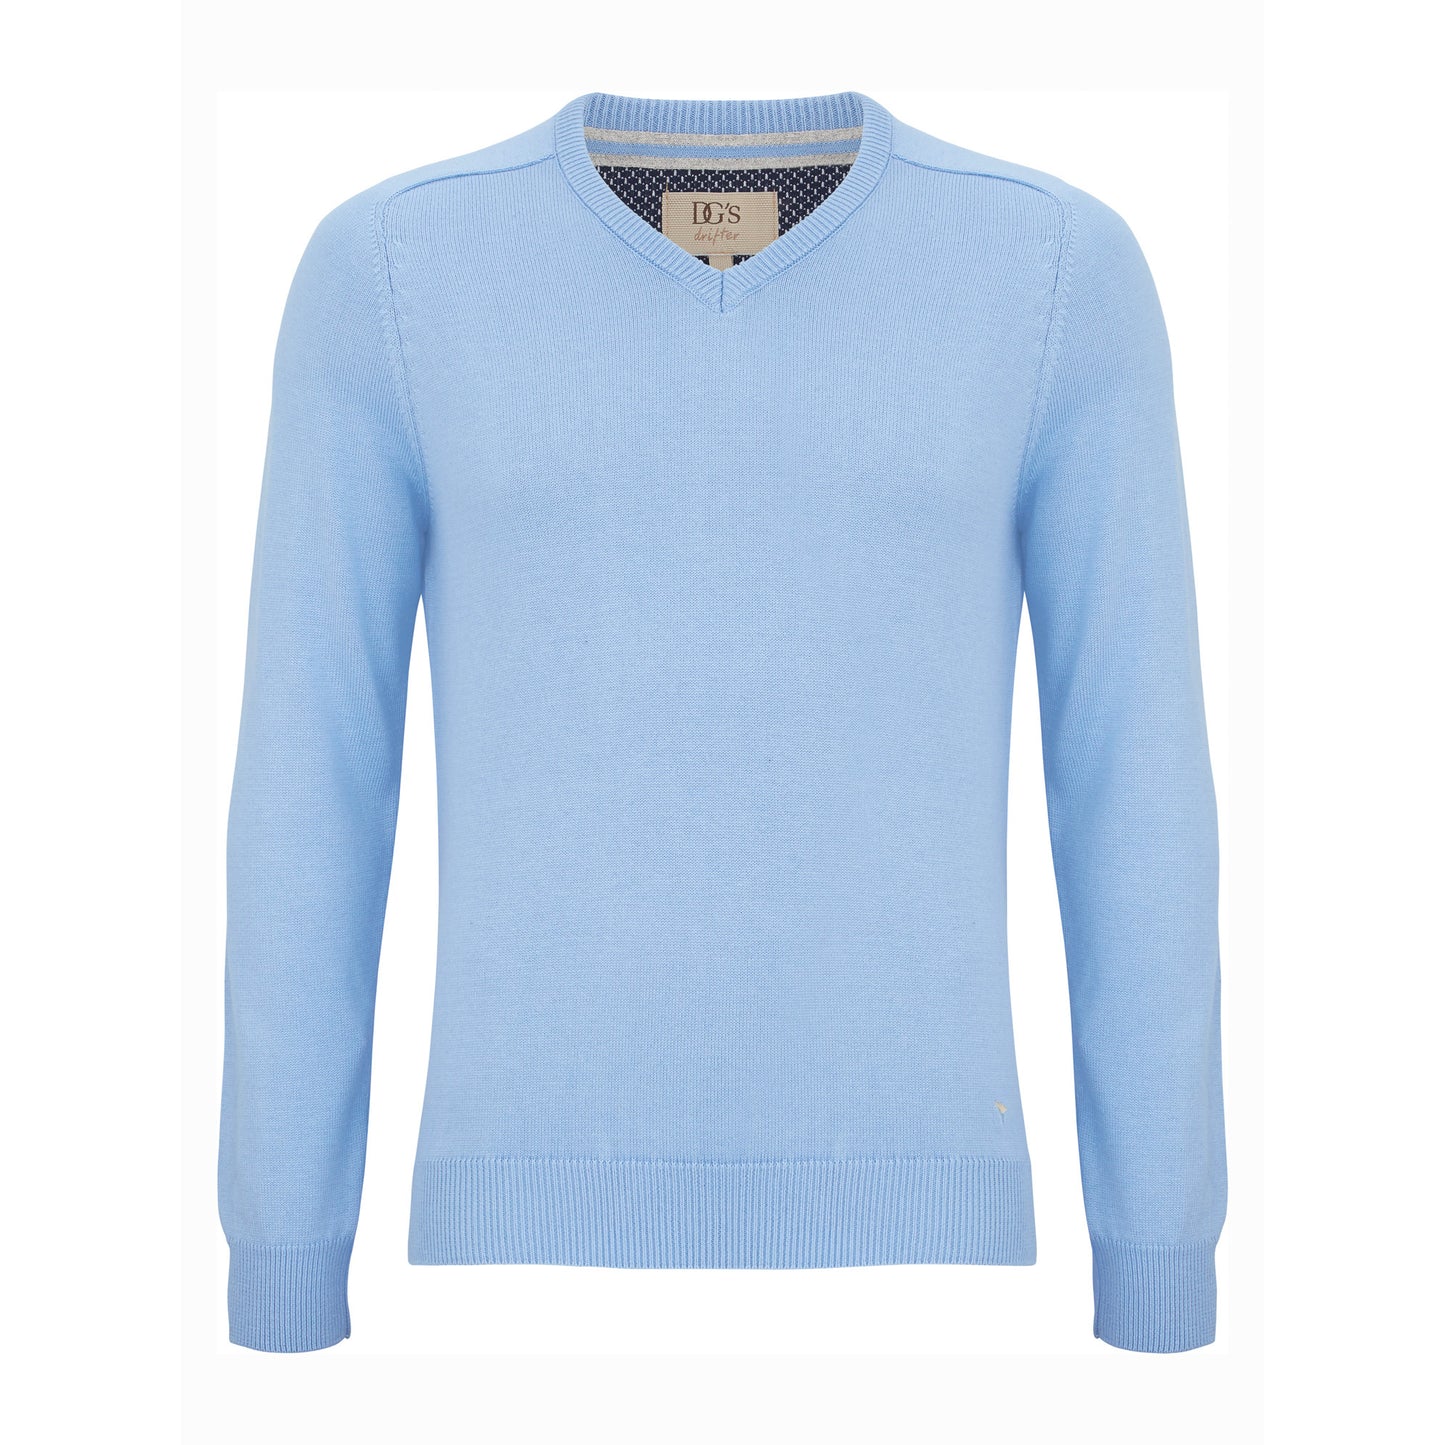 Drifter 55599 21 Light Blue V-Neck Sweater